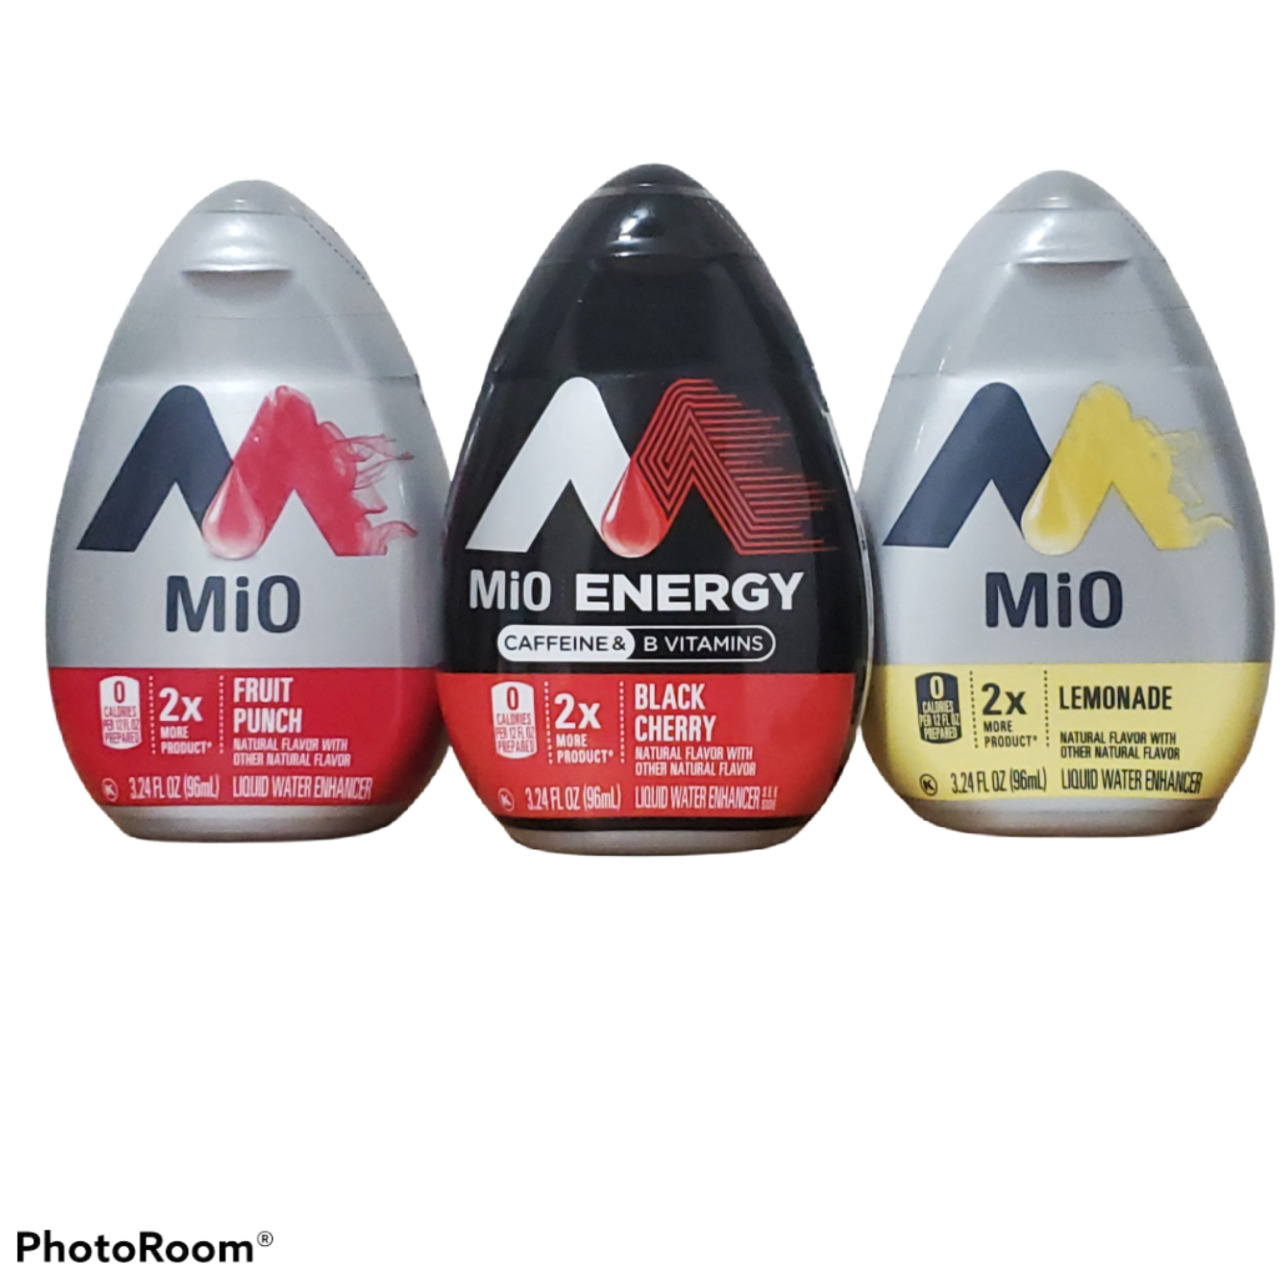 Mio Liquid Water Enhancer 3 Pack Lemonade Black Cherry Fruit Punch Energy New